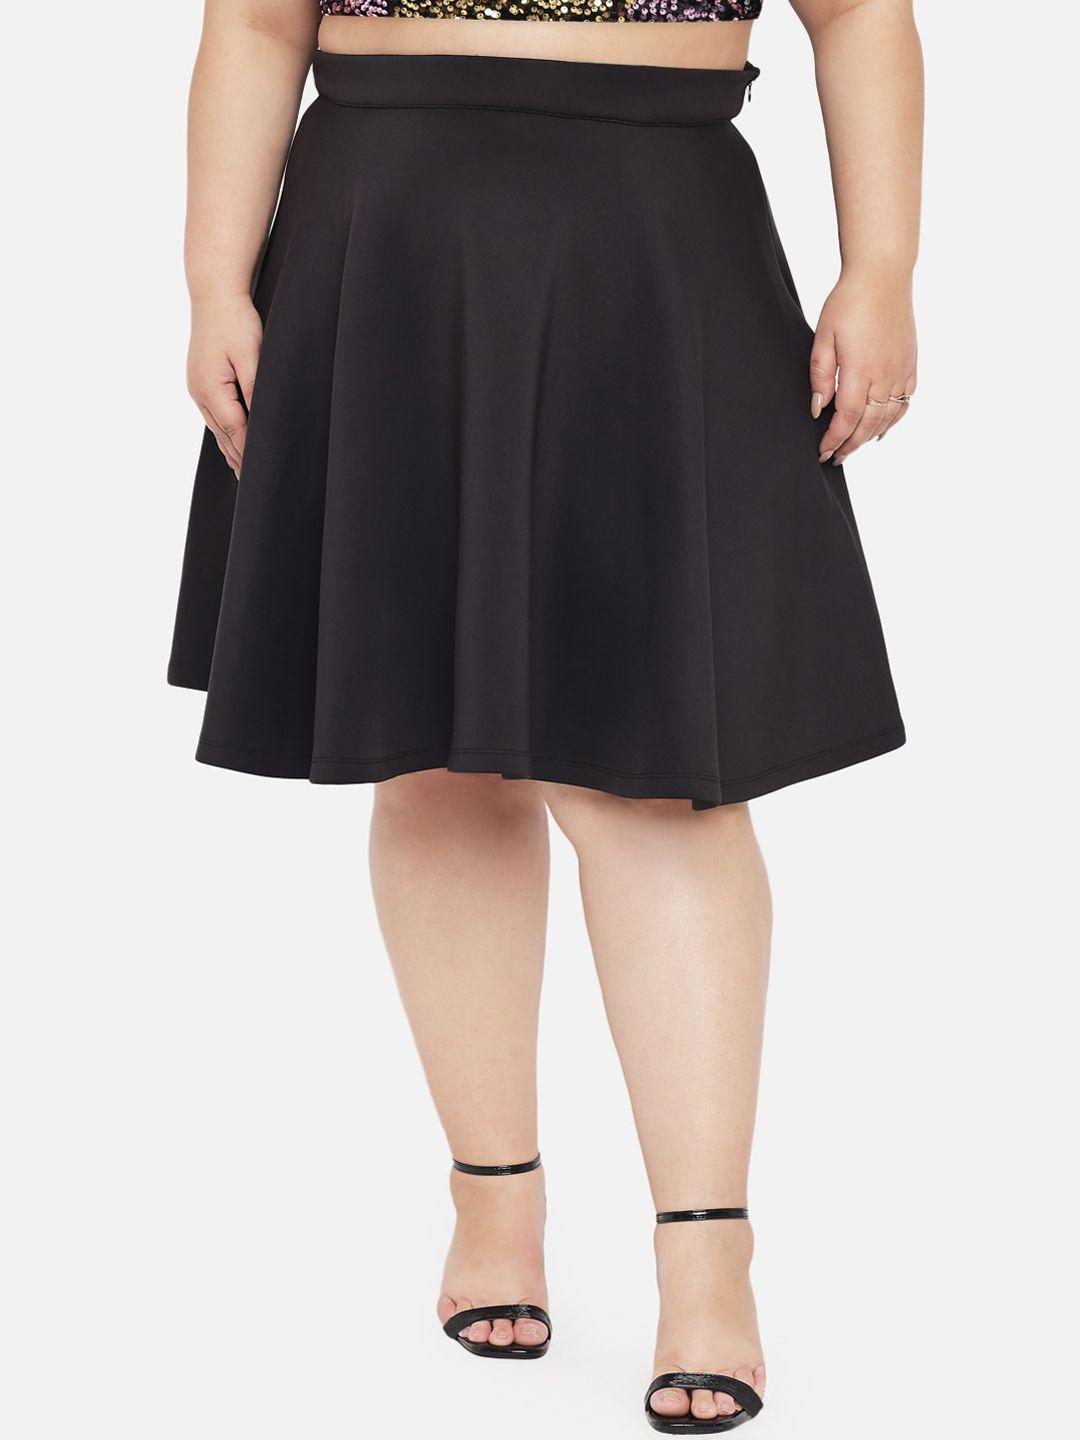 wild u women plus size black flared mini skirt